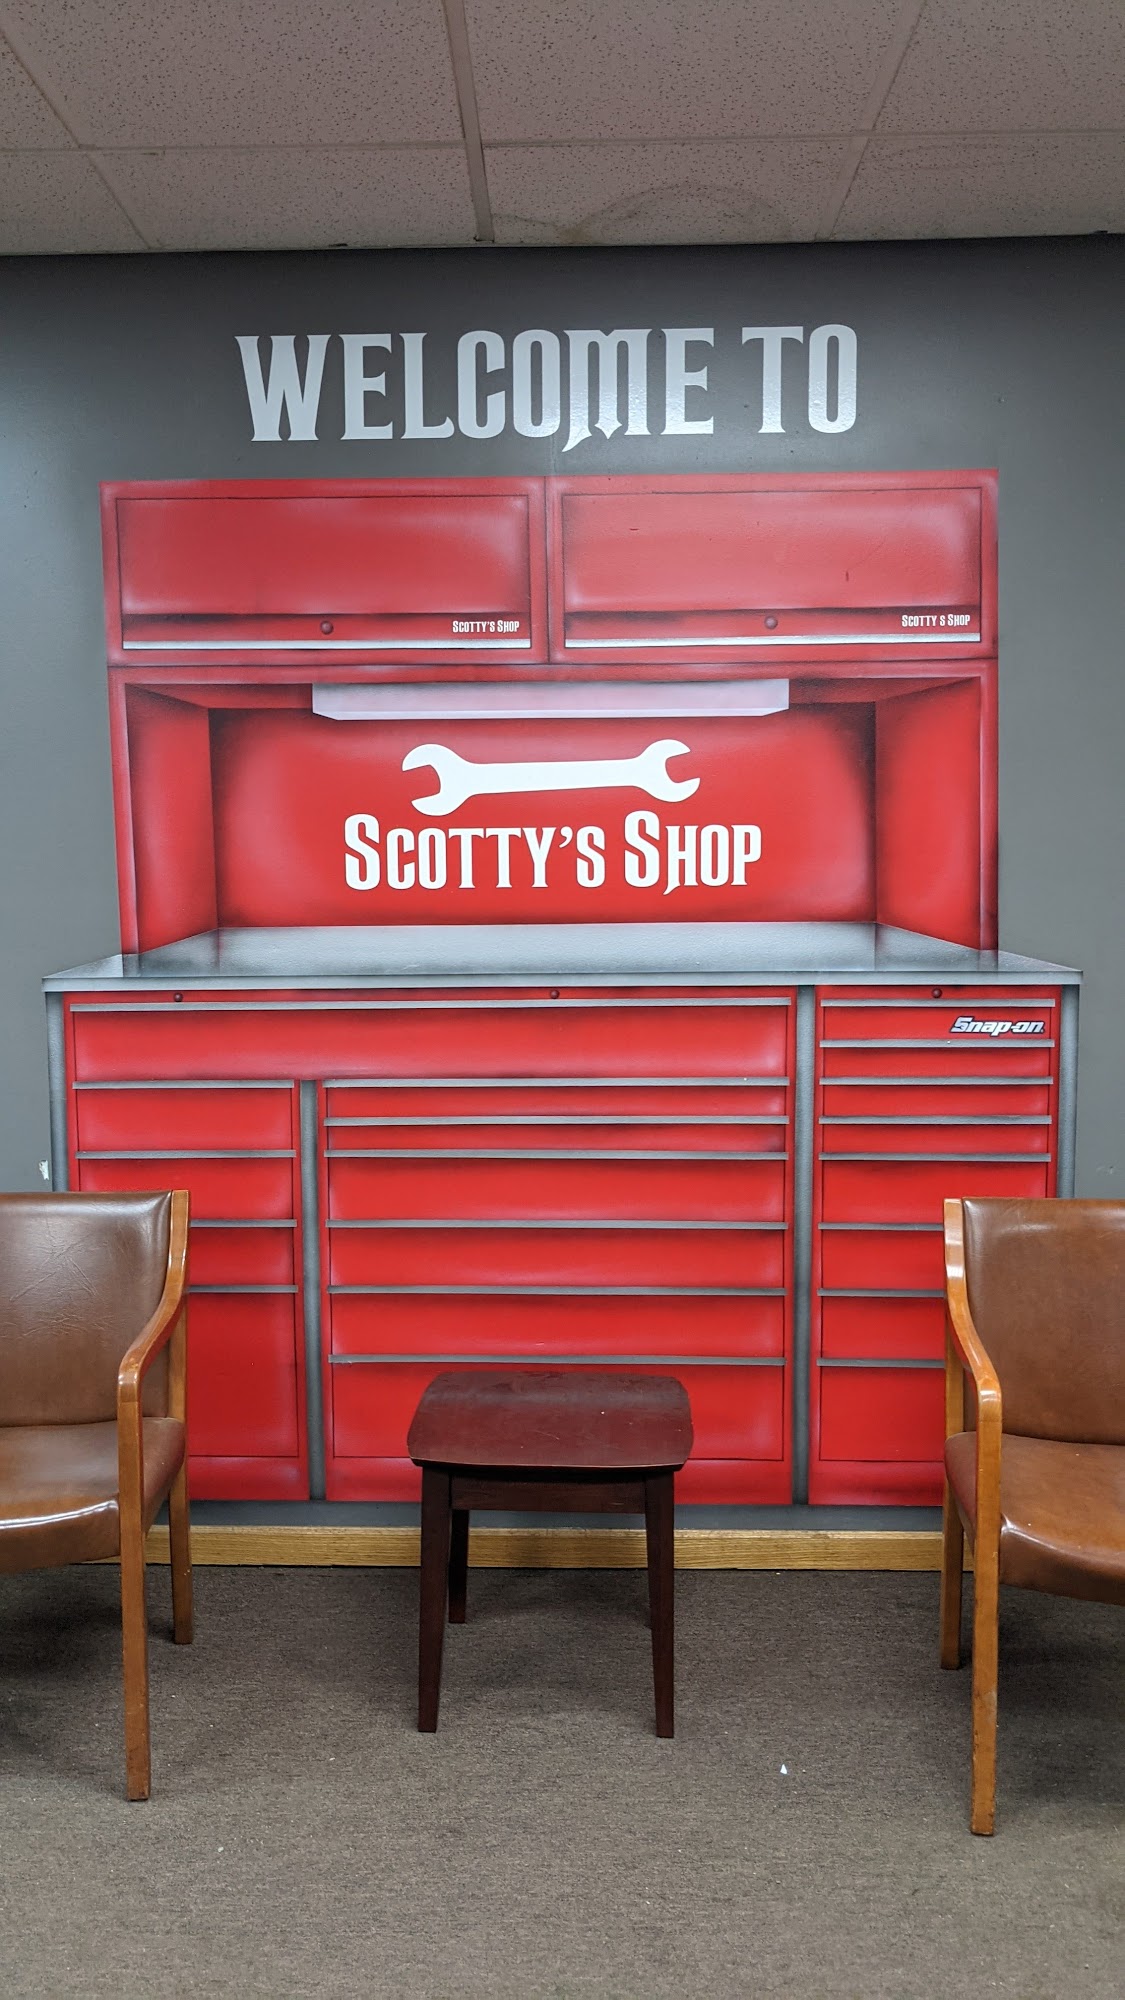 Scotty's Shop